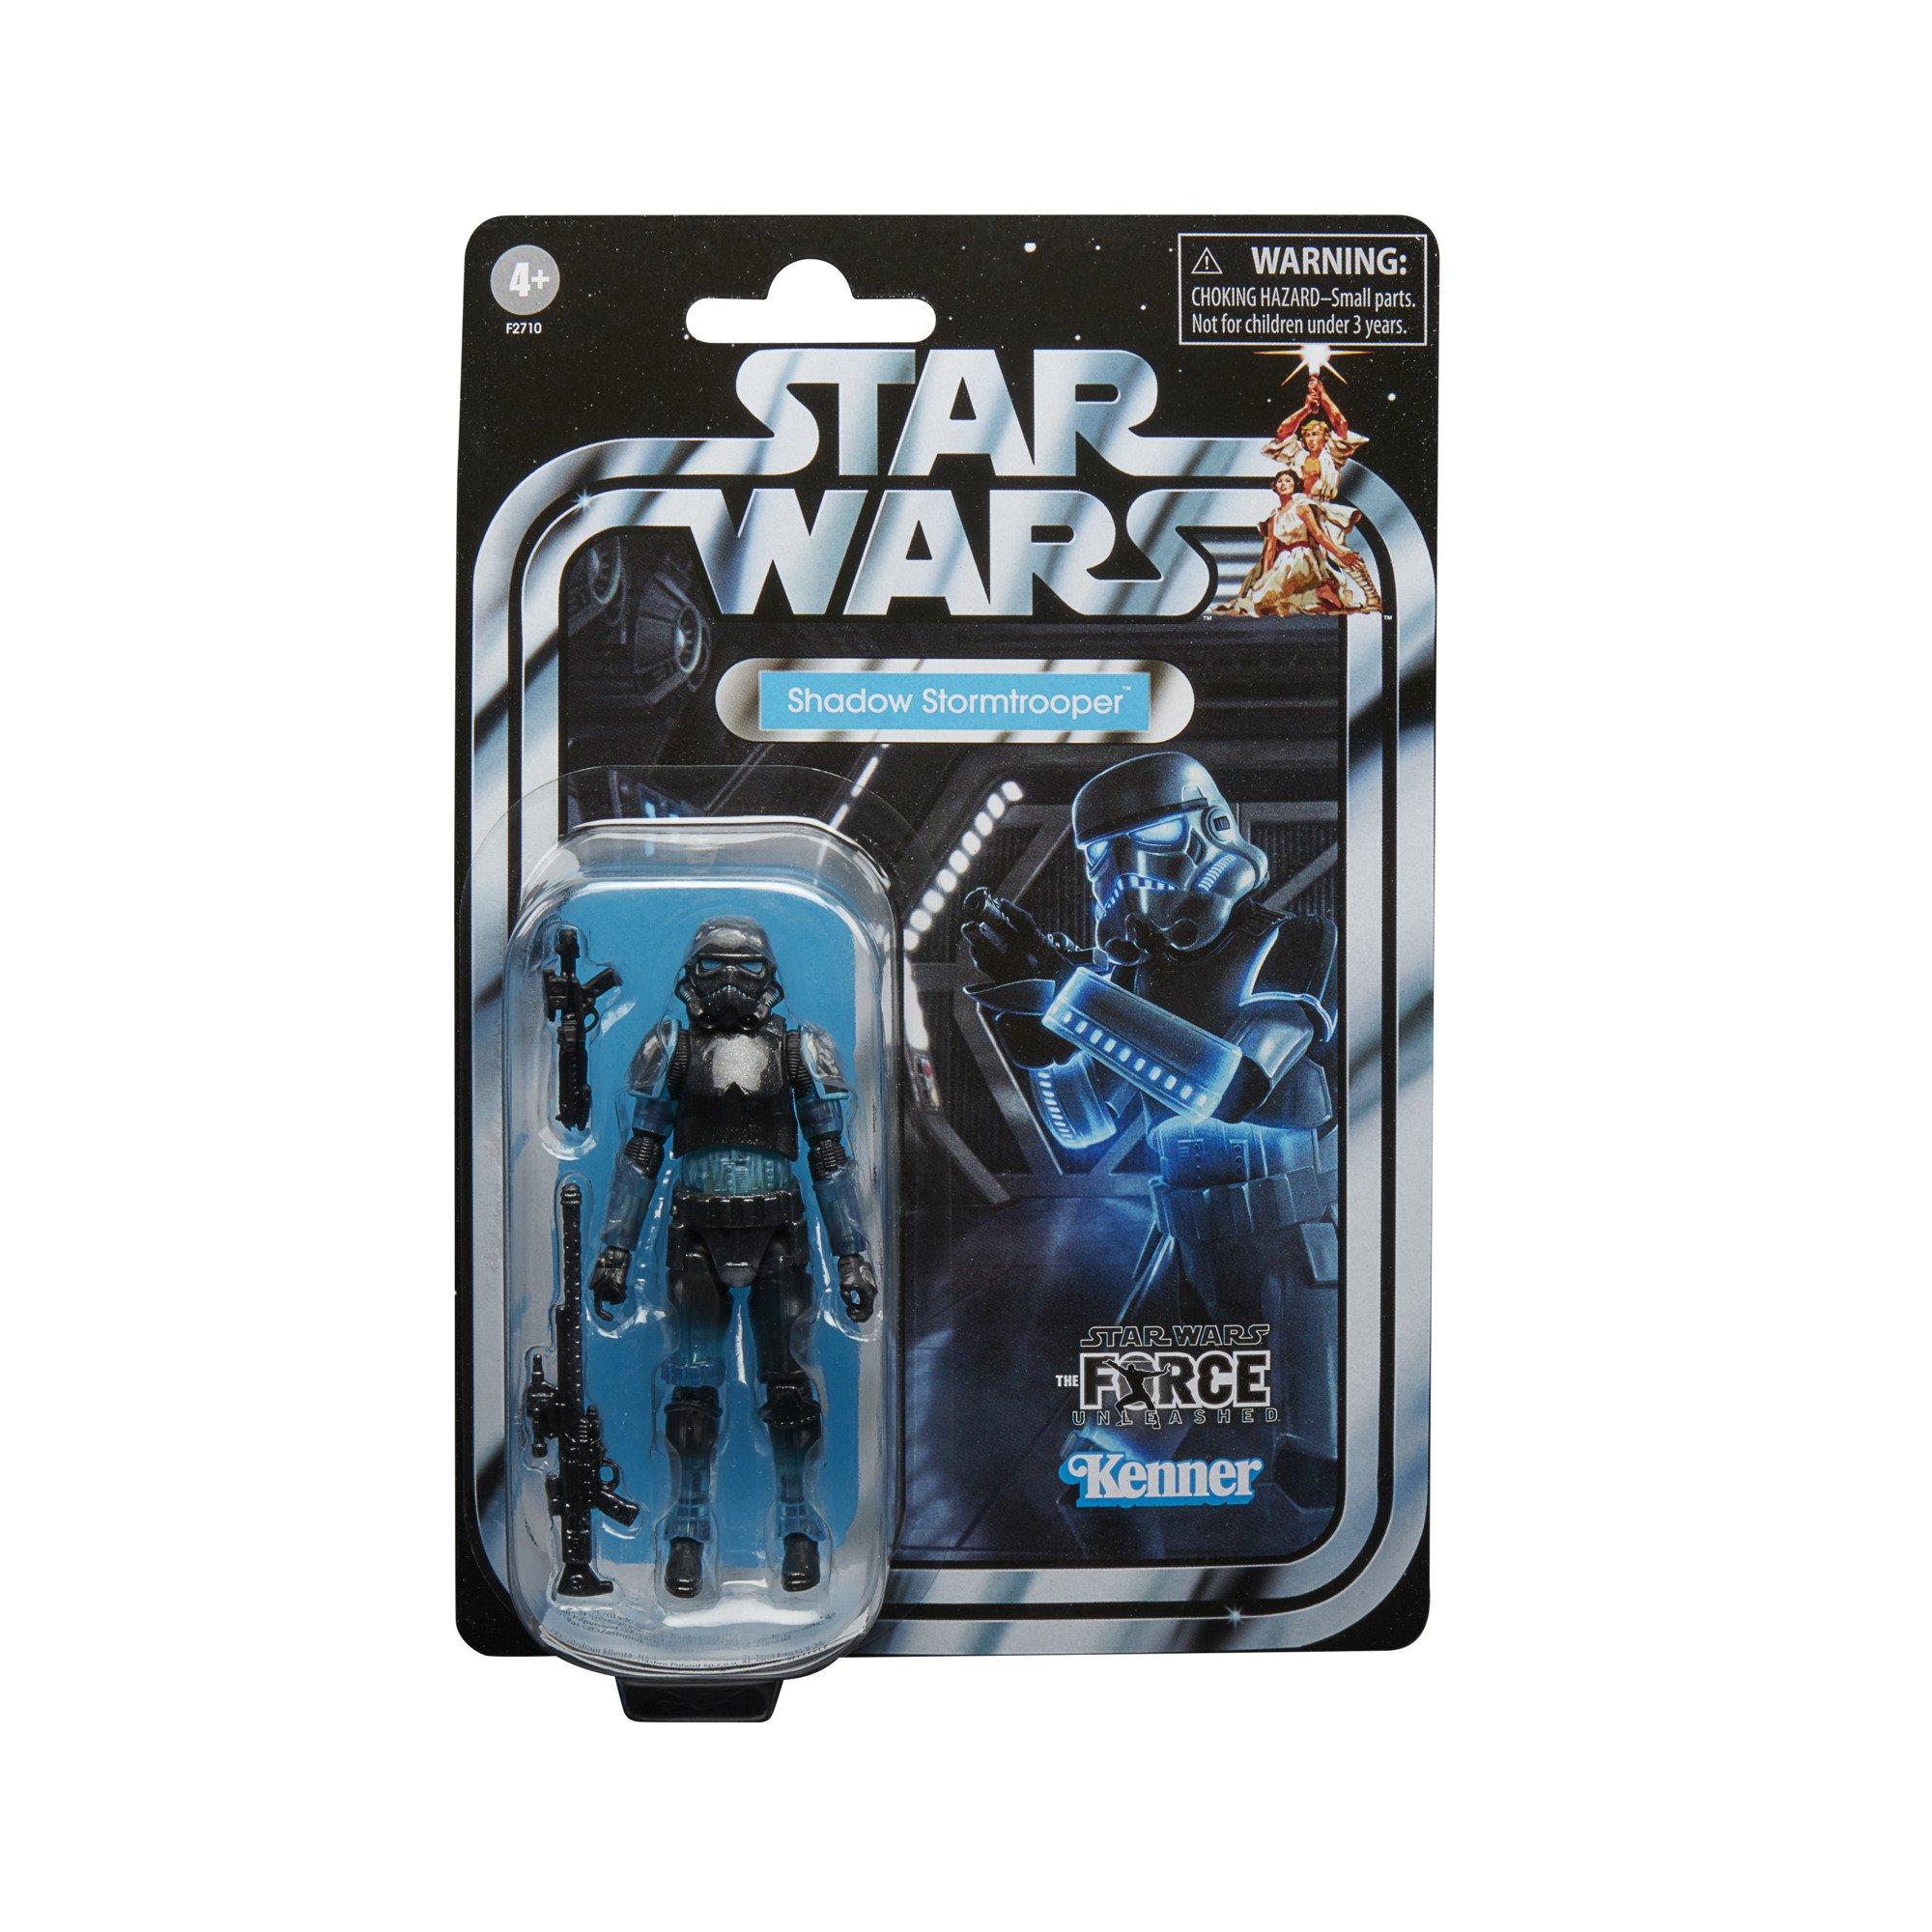 Star Wars Series Figurines Darth Vader Storm trooper Action Figures 